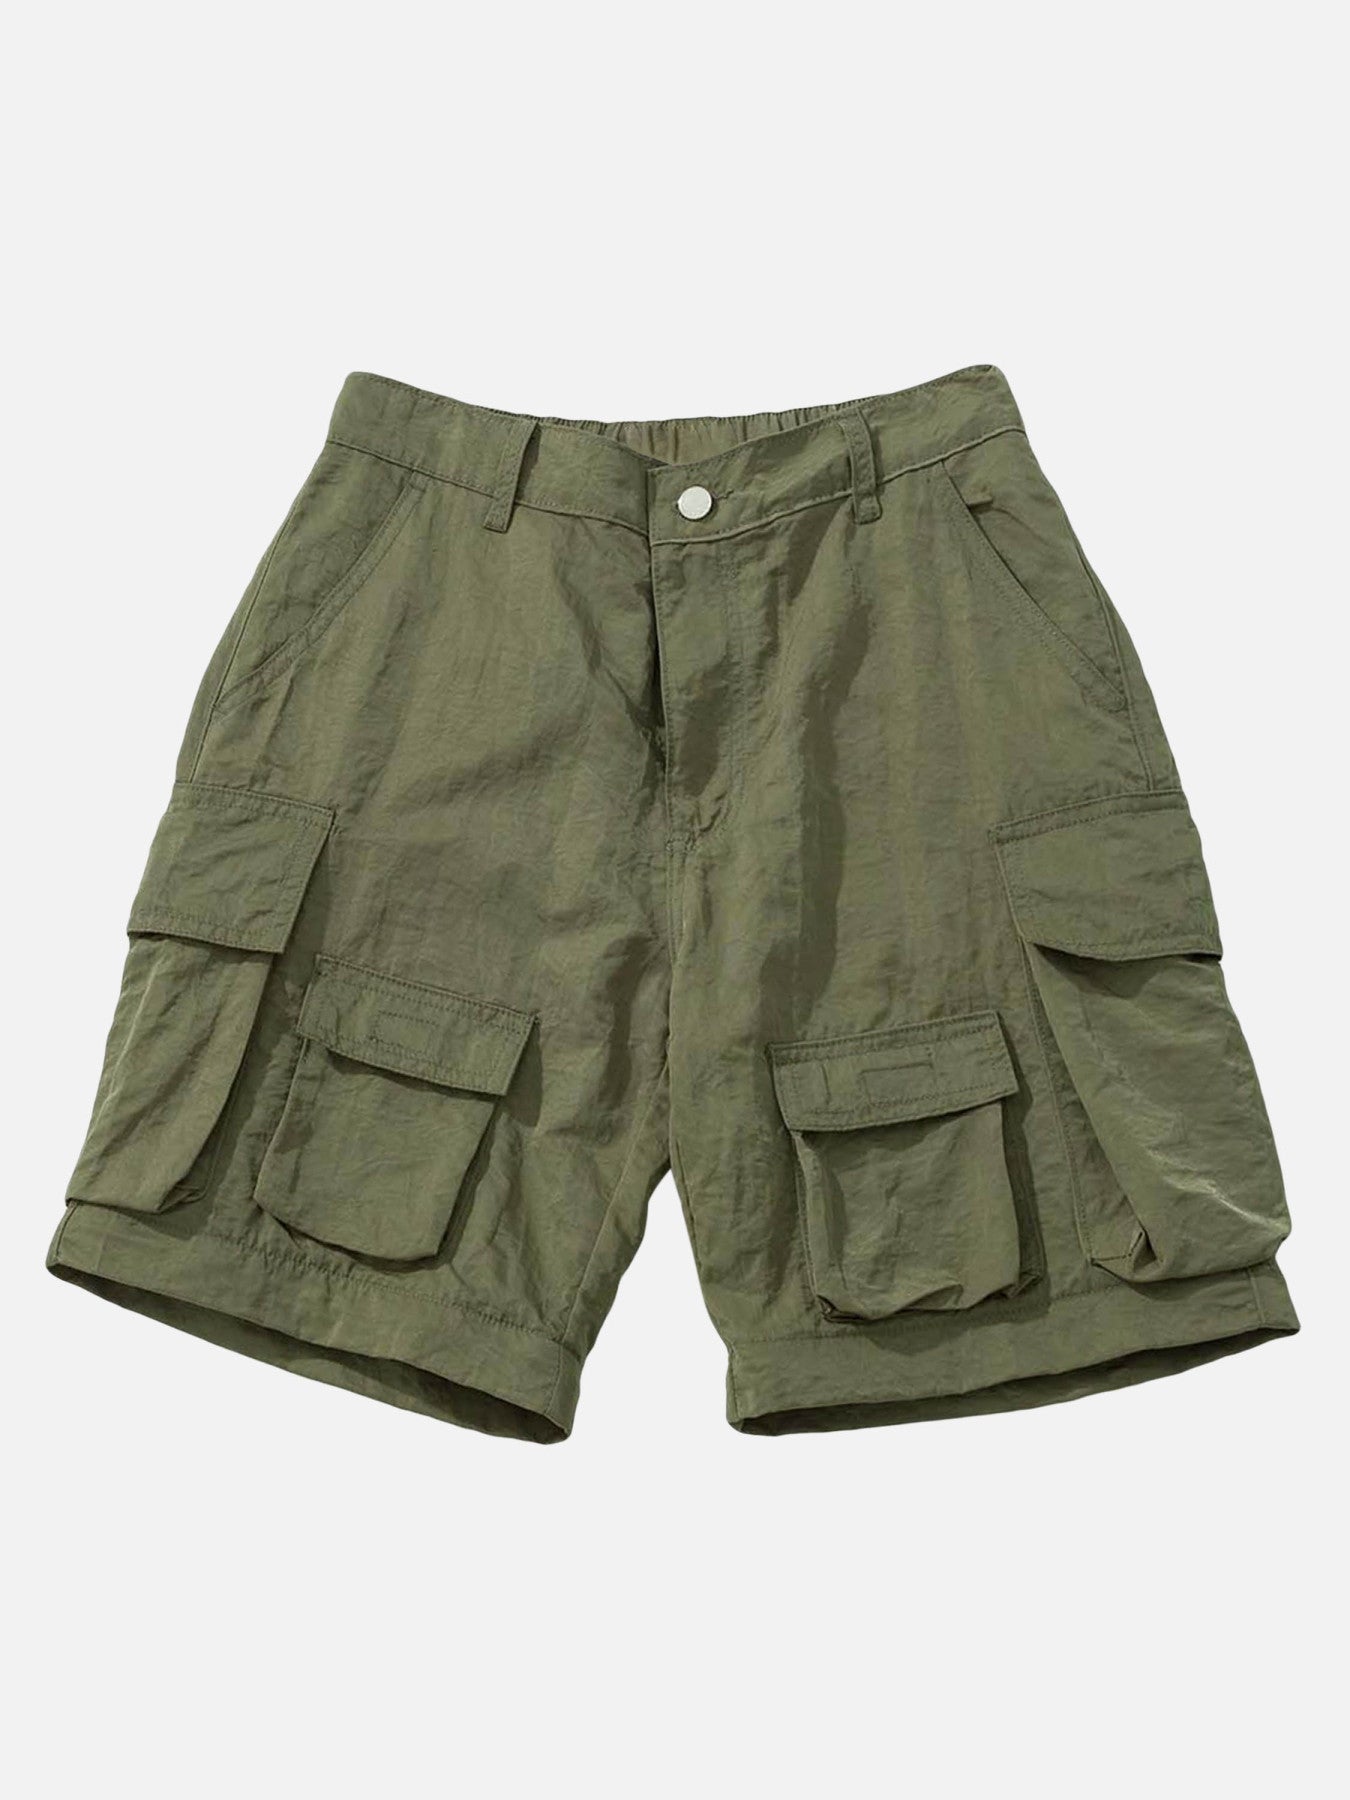 Thesupermade Detachable Multi-pocket Work Pants